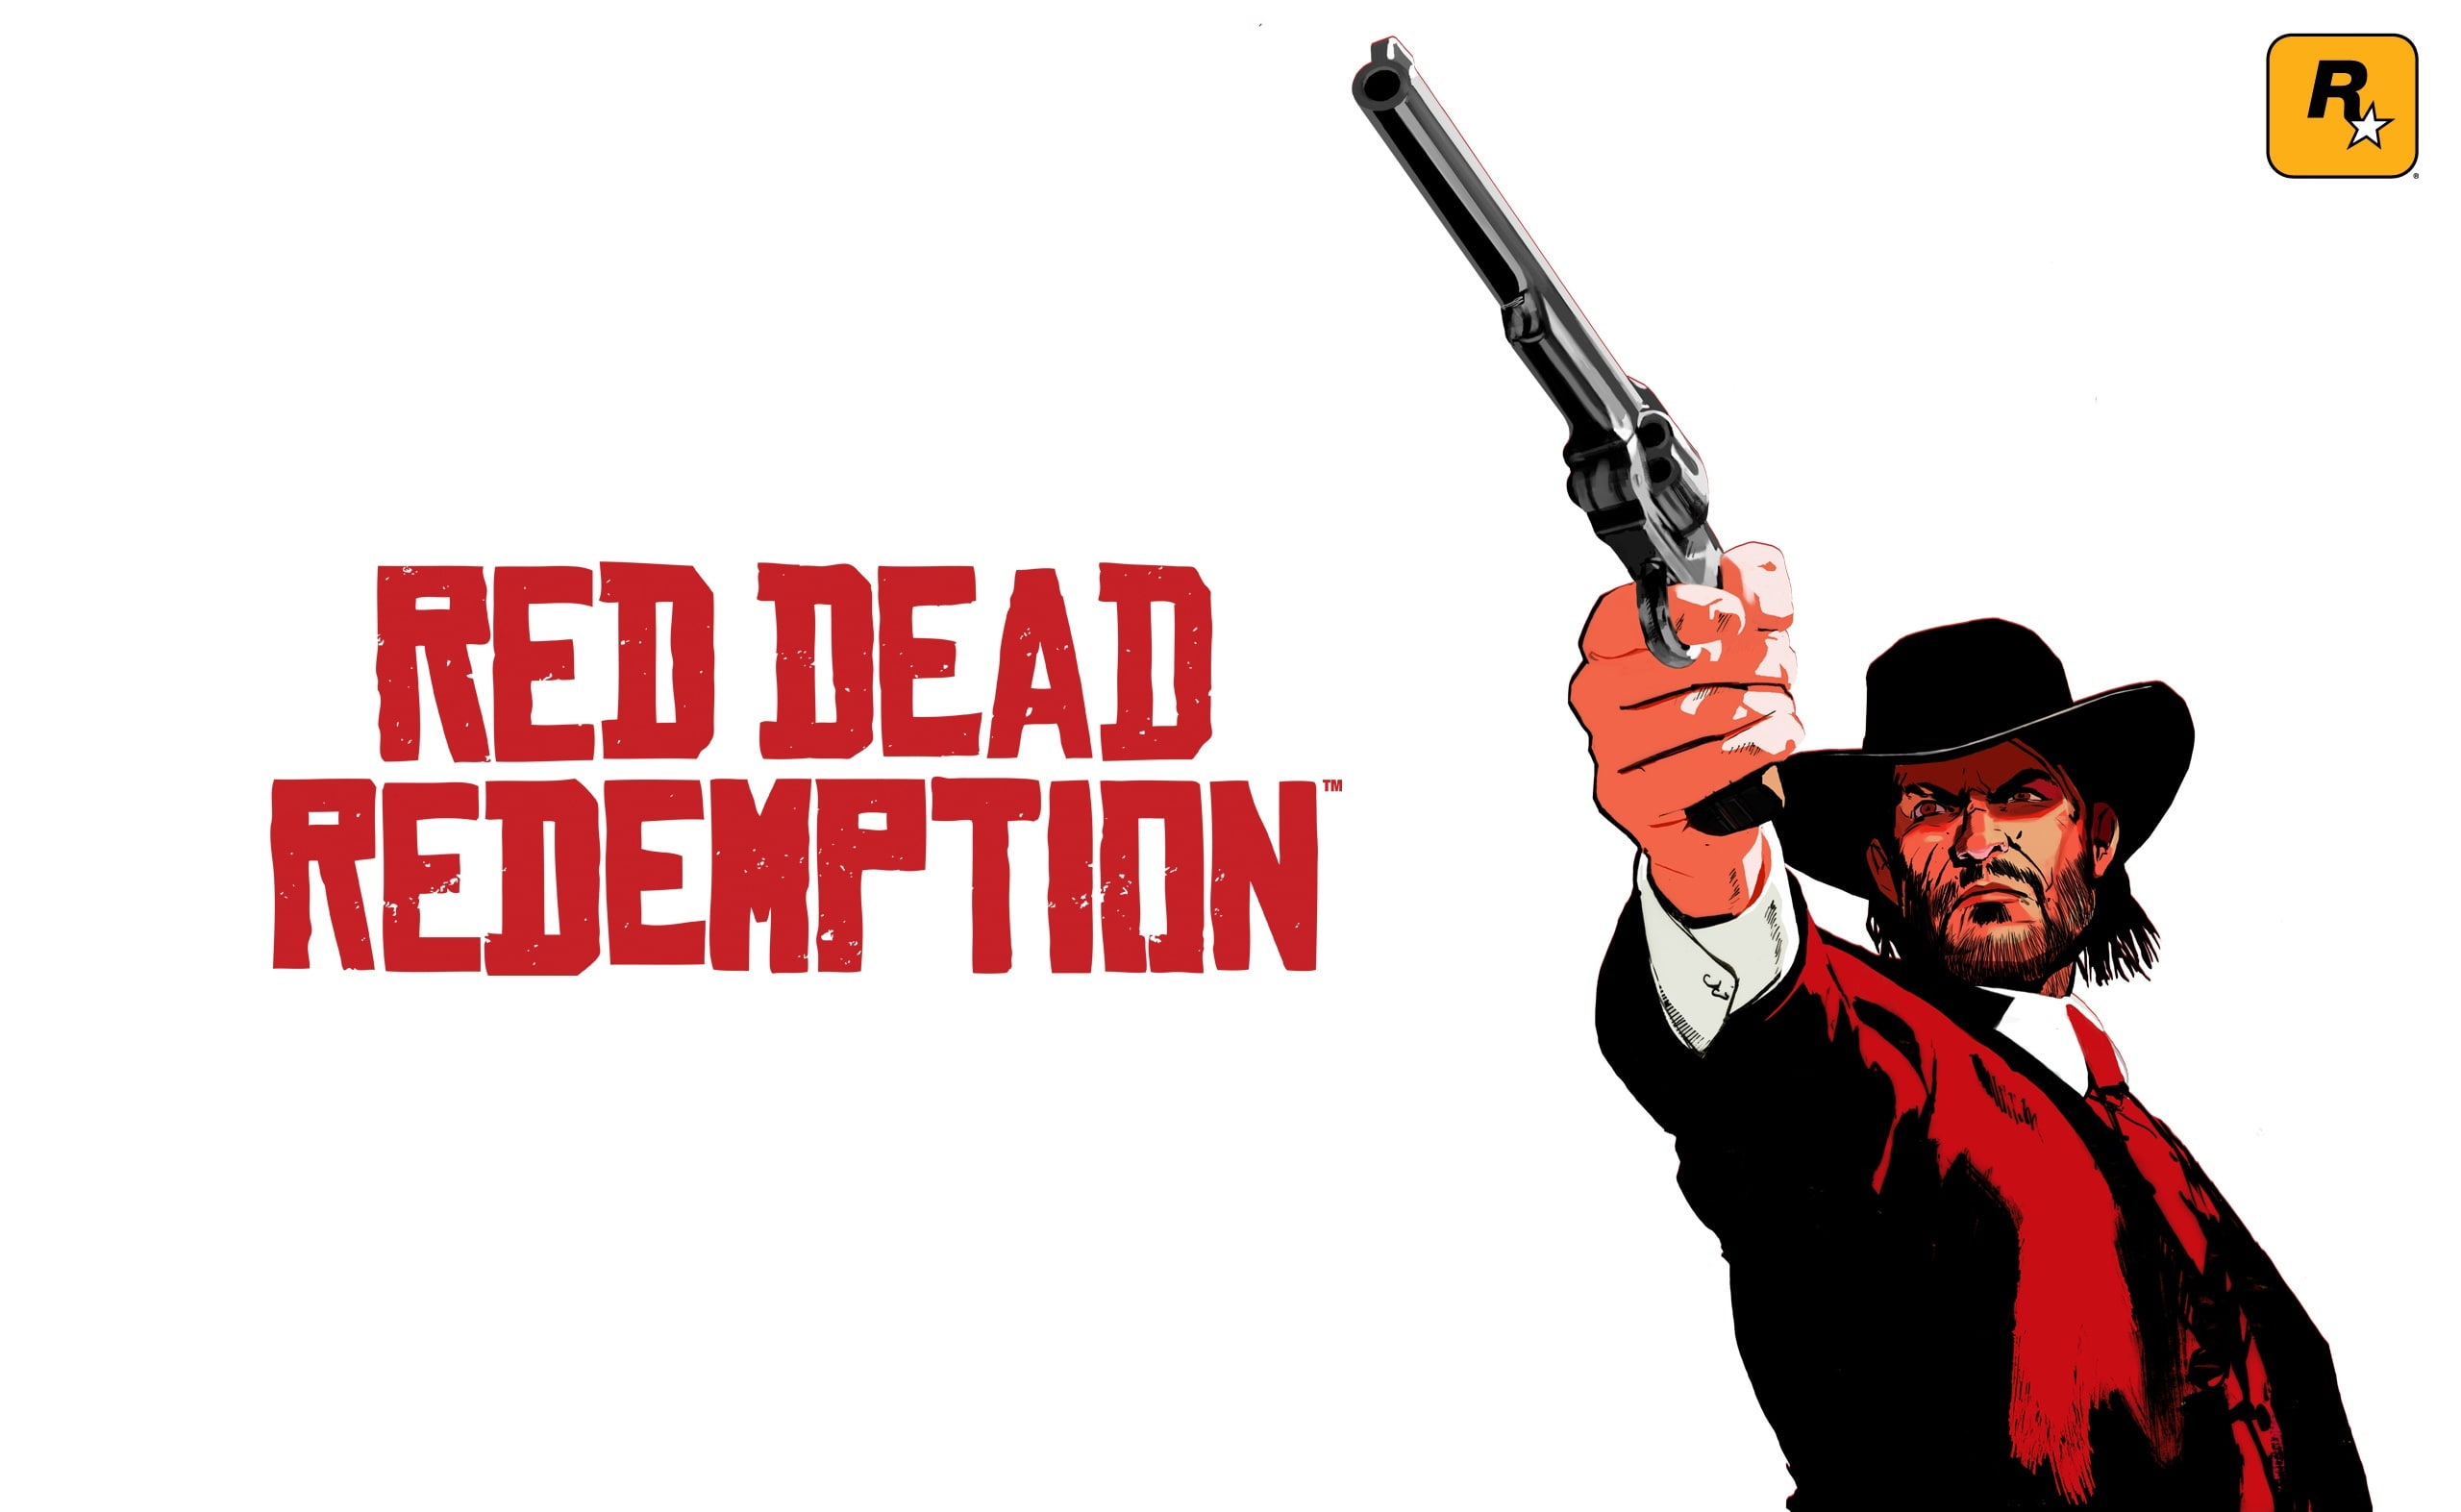 Red Dead Redemption, Marston, Red Dead Redemption wallpaper, Games